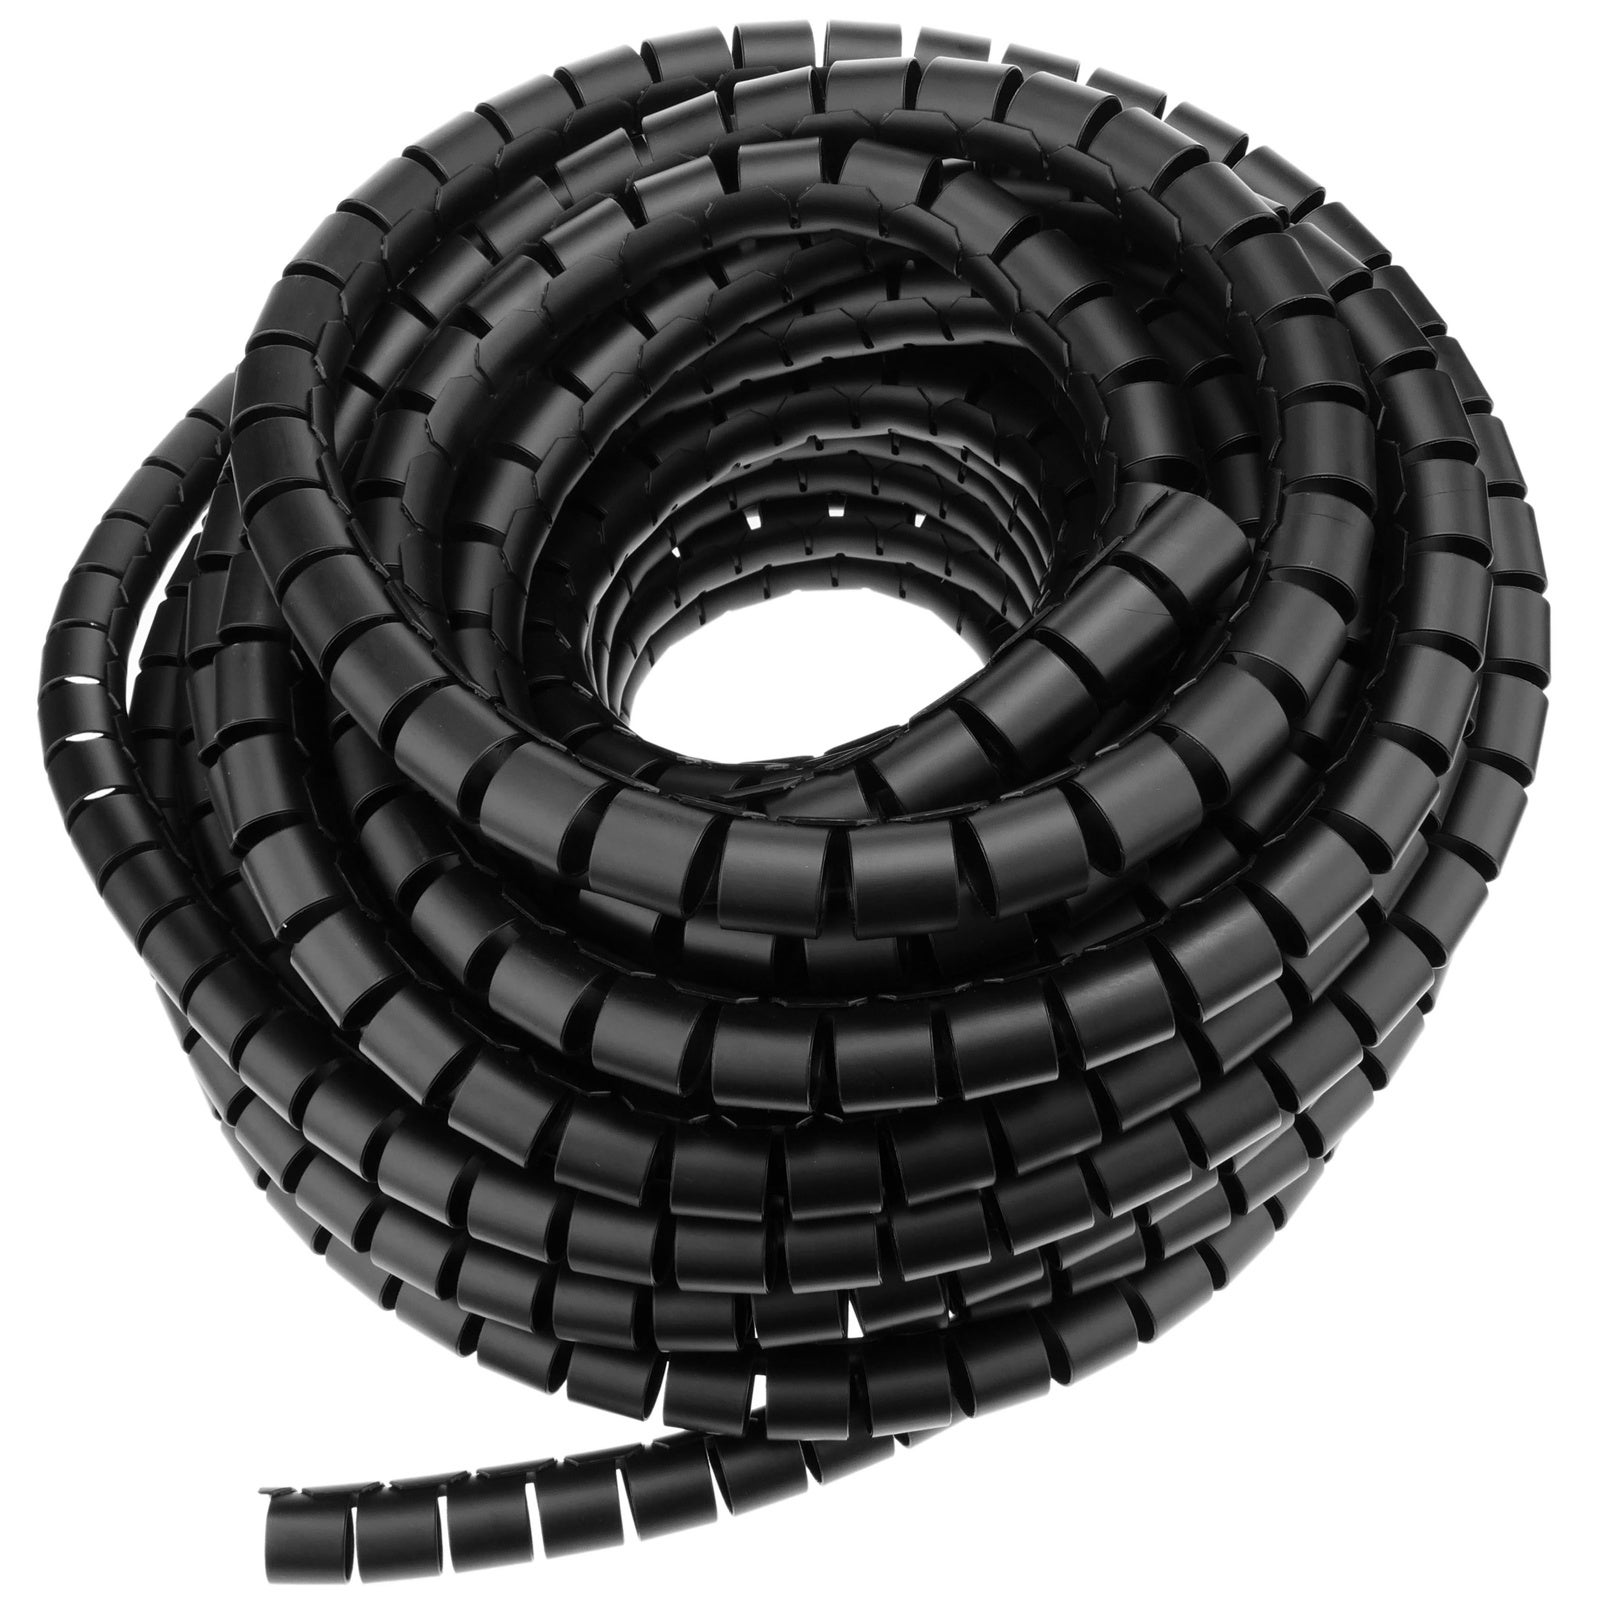 Cubre Cables En Espiral 1/4 De Pulgada Negro (5 Metros)